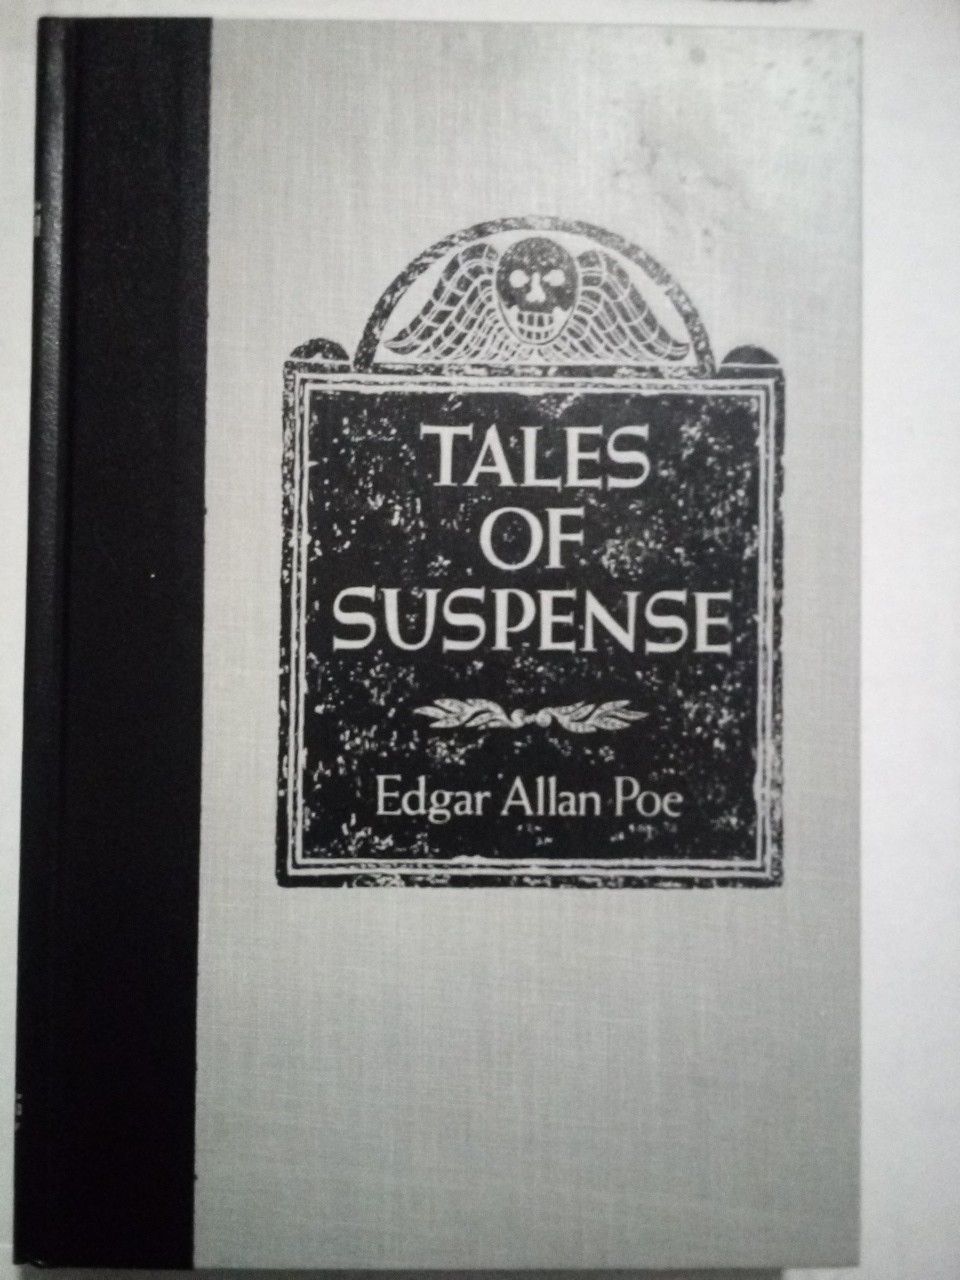 Edgar Allan Poe Tales of Suspense